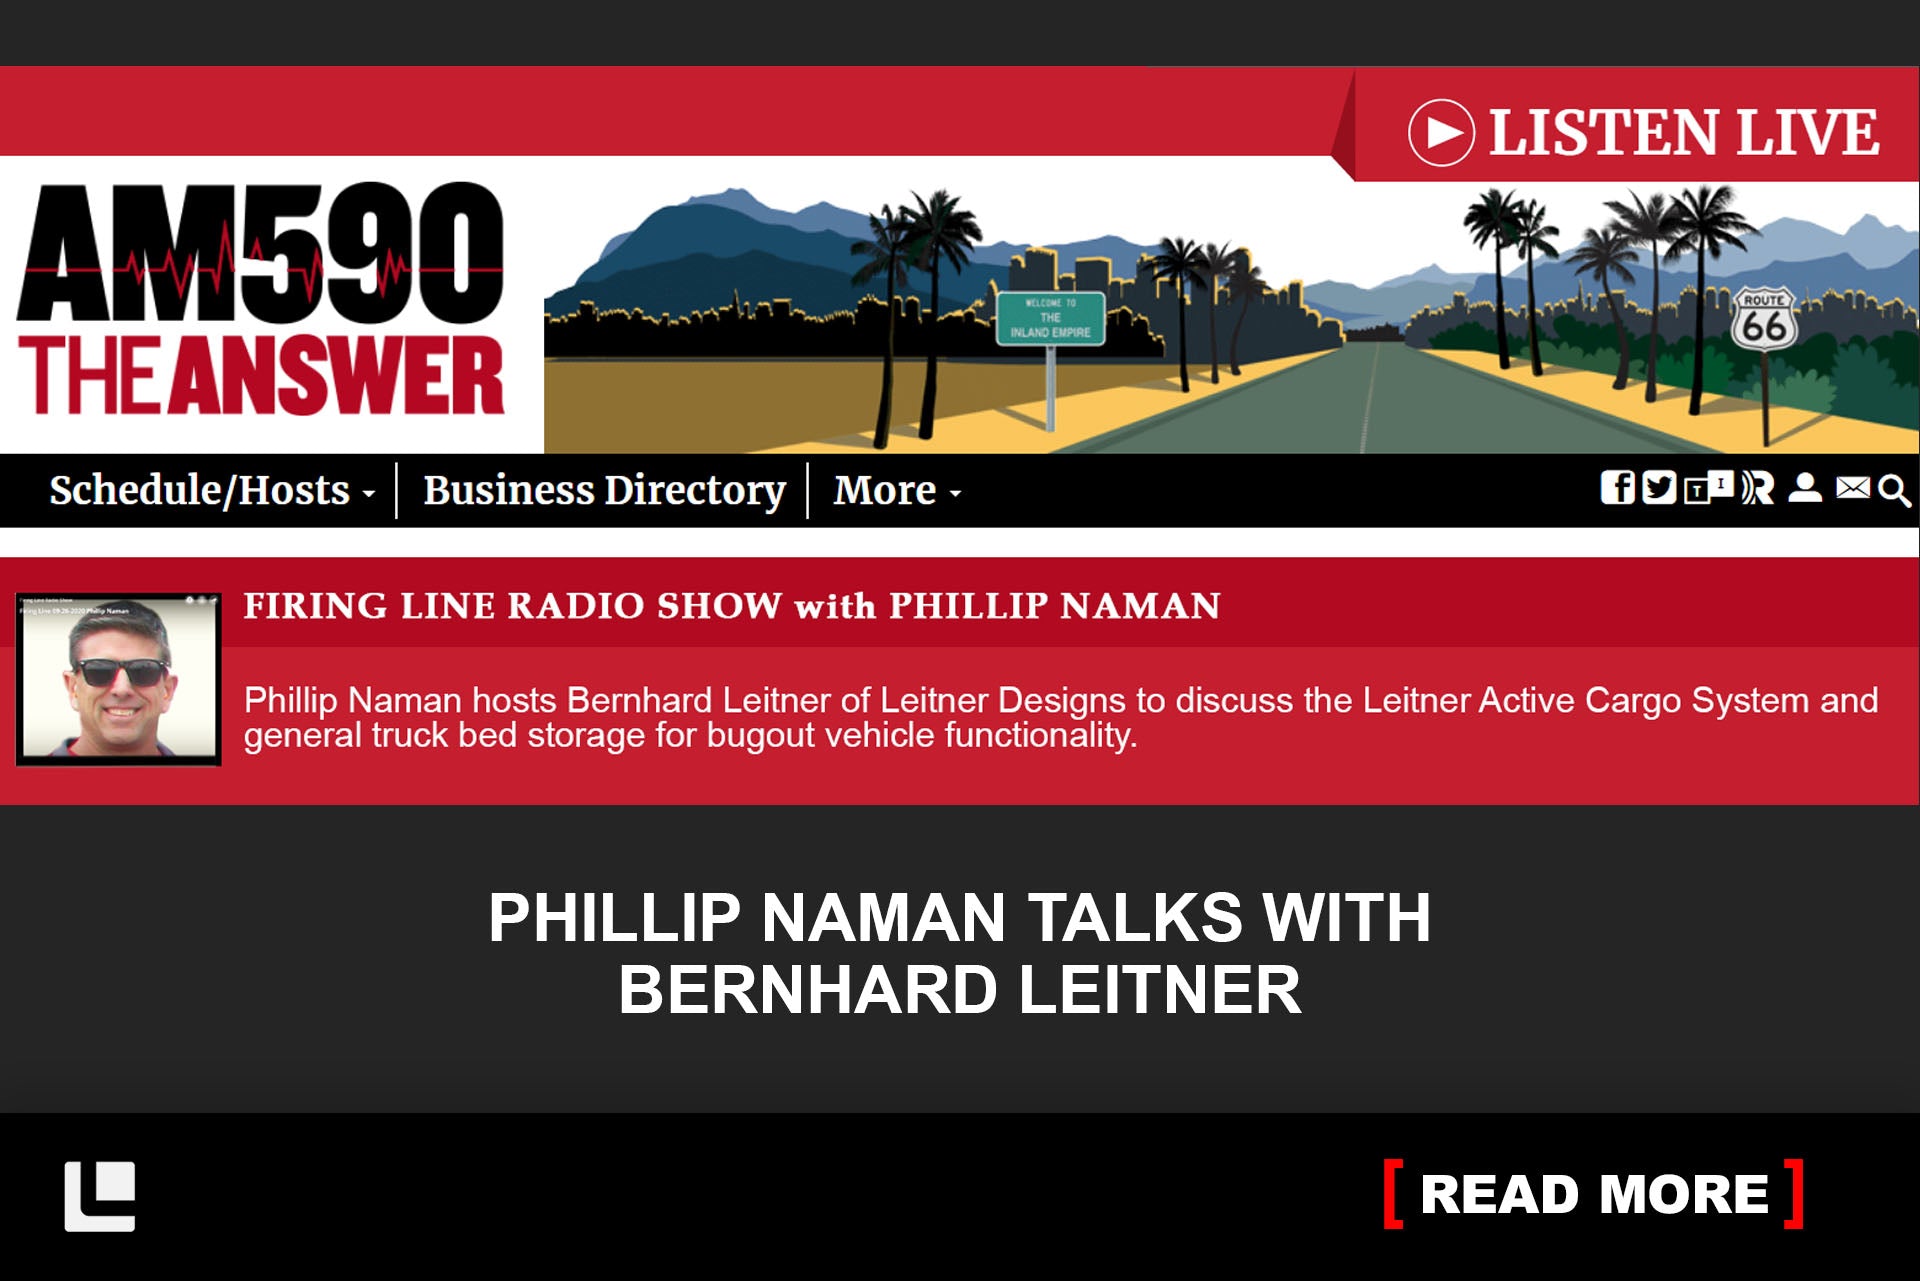 FIRING LINE RADIO SHOW with PHILLIP NAMAN